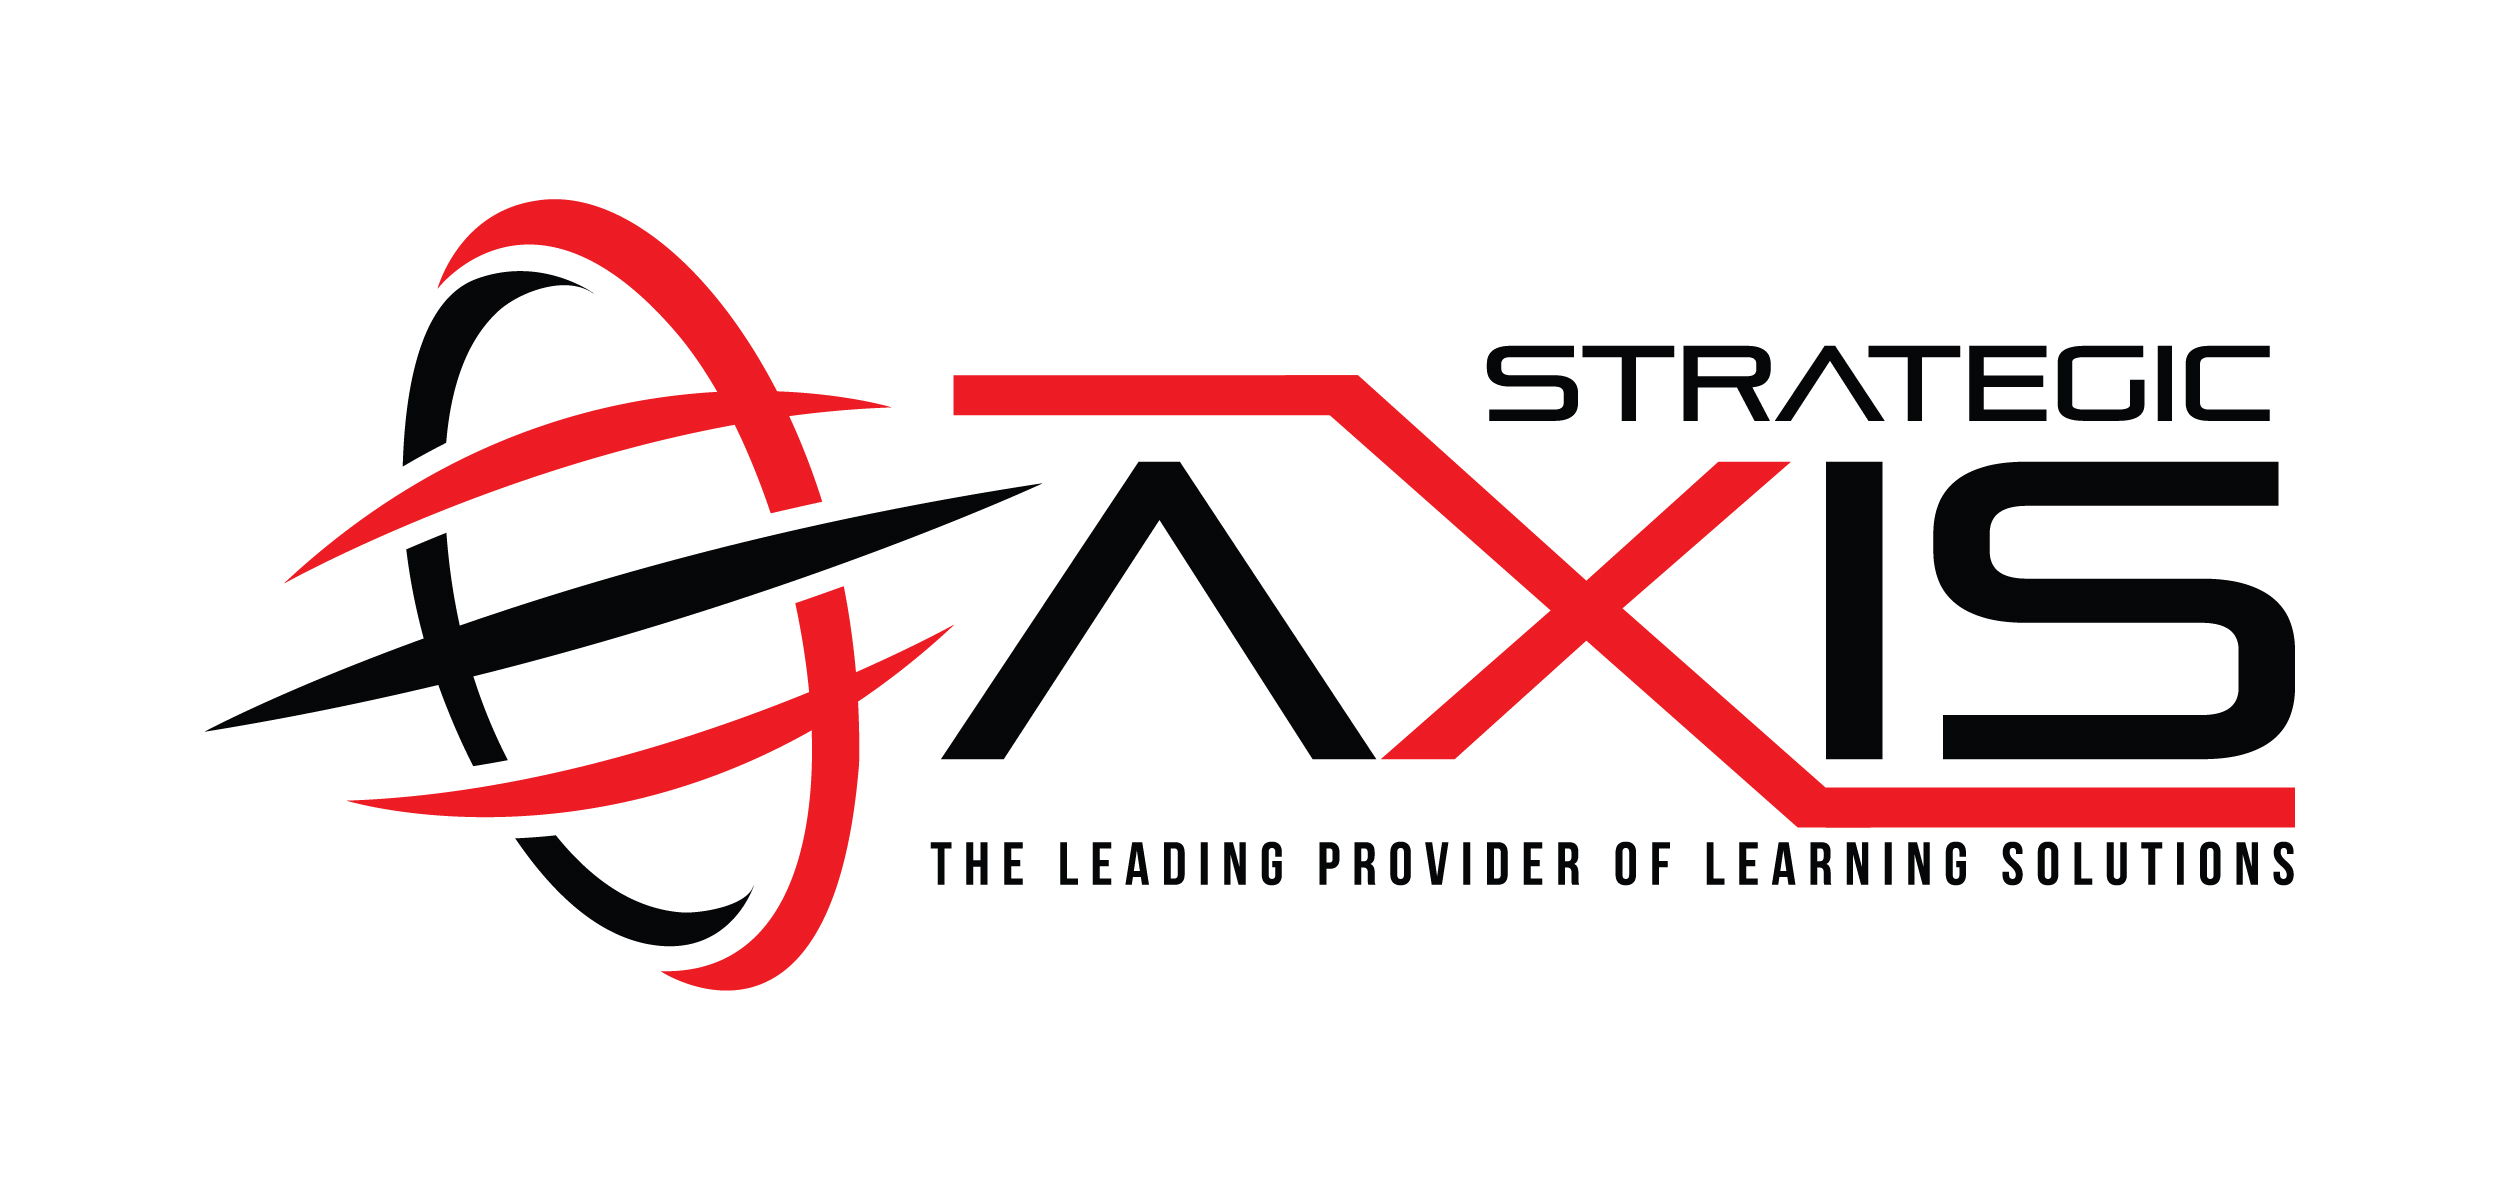 Strategic Axis Logo